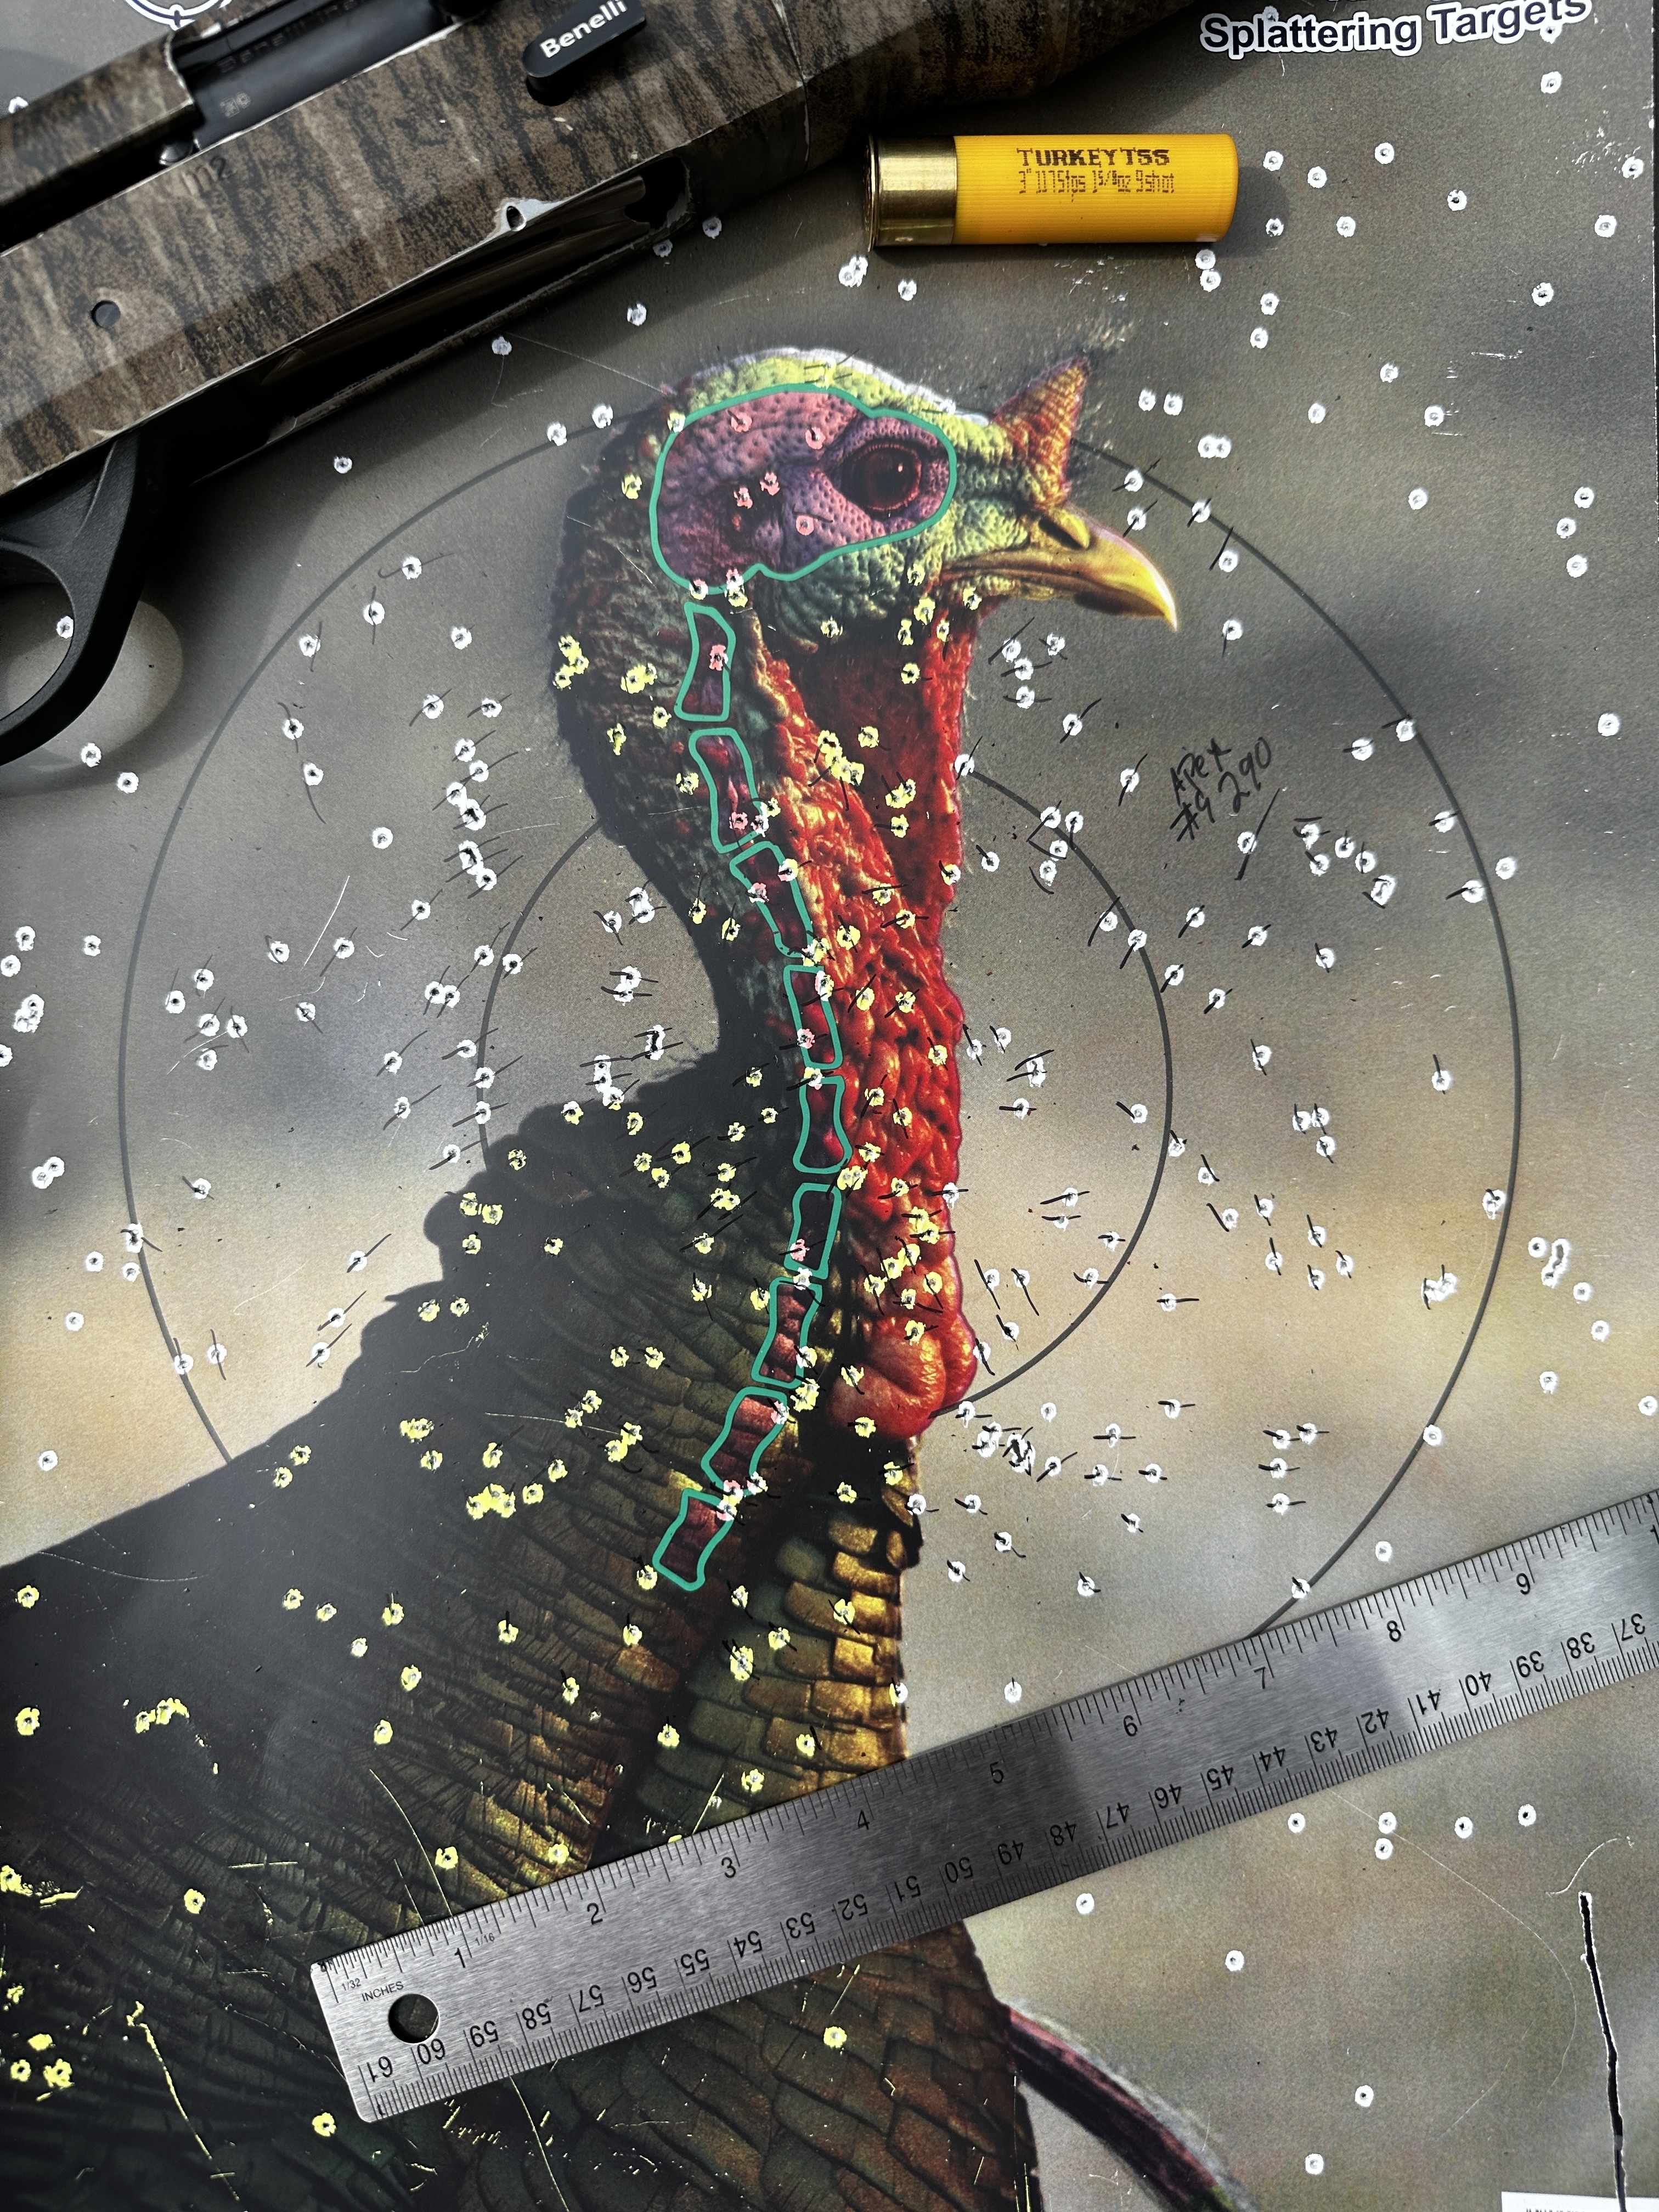 Shotgun sits on a patterned turkey target.